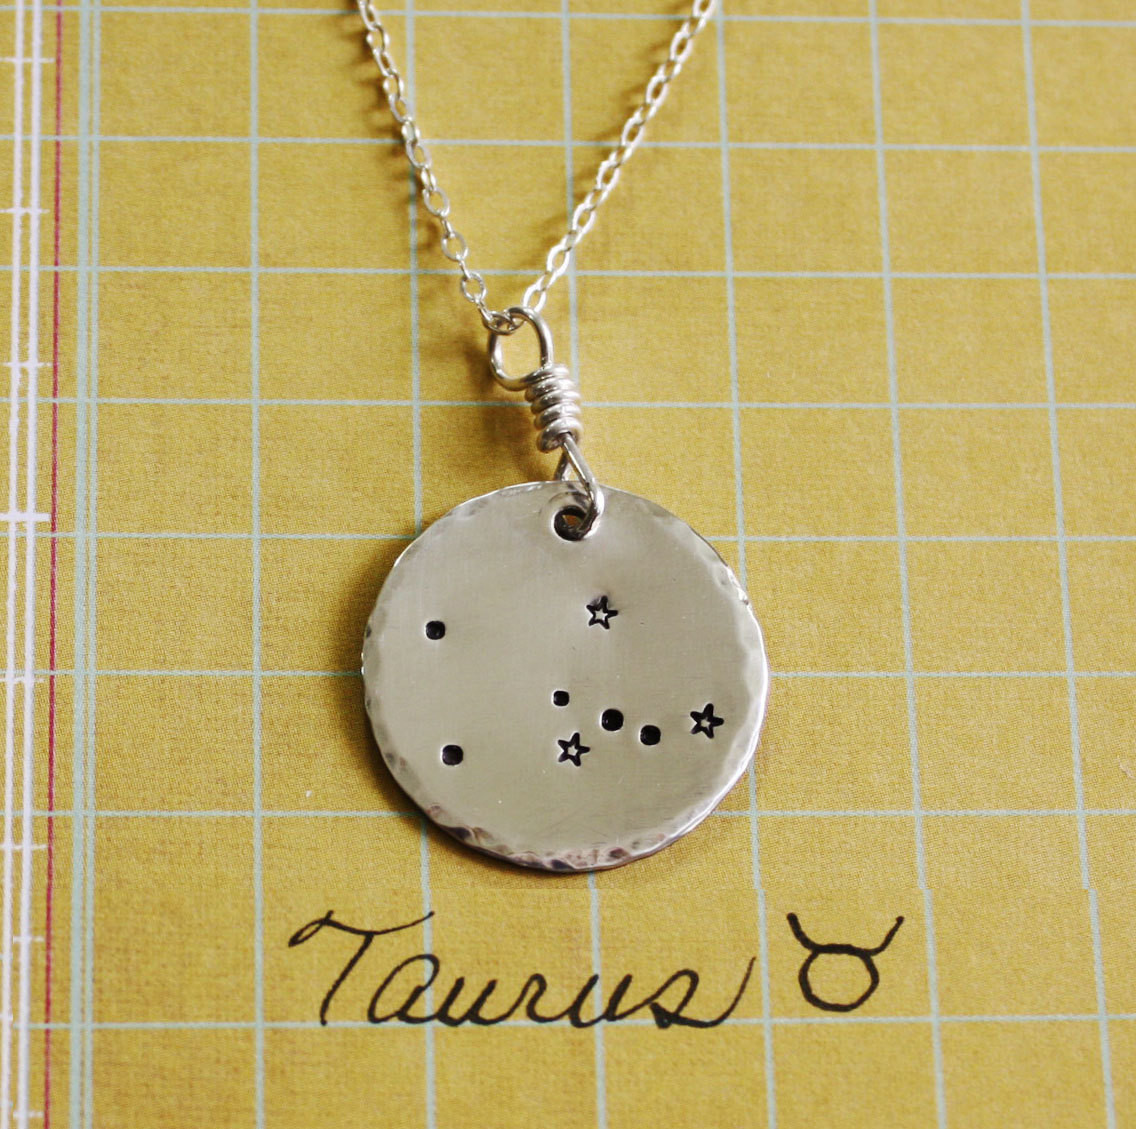 Taurus Constellation Necklace
 Taurus constellation zodiac necklace Sterling silver by